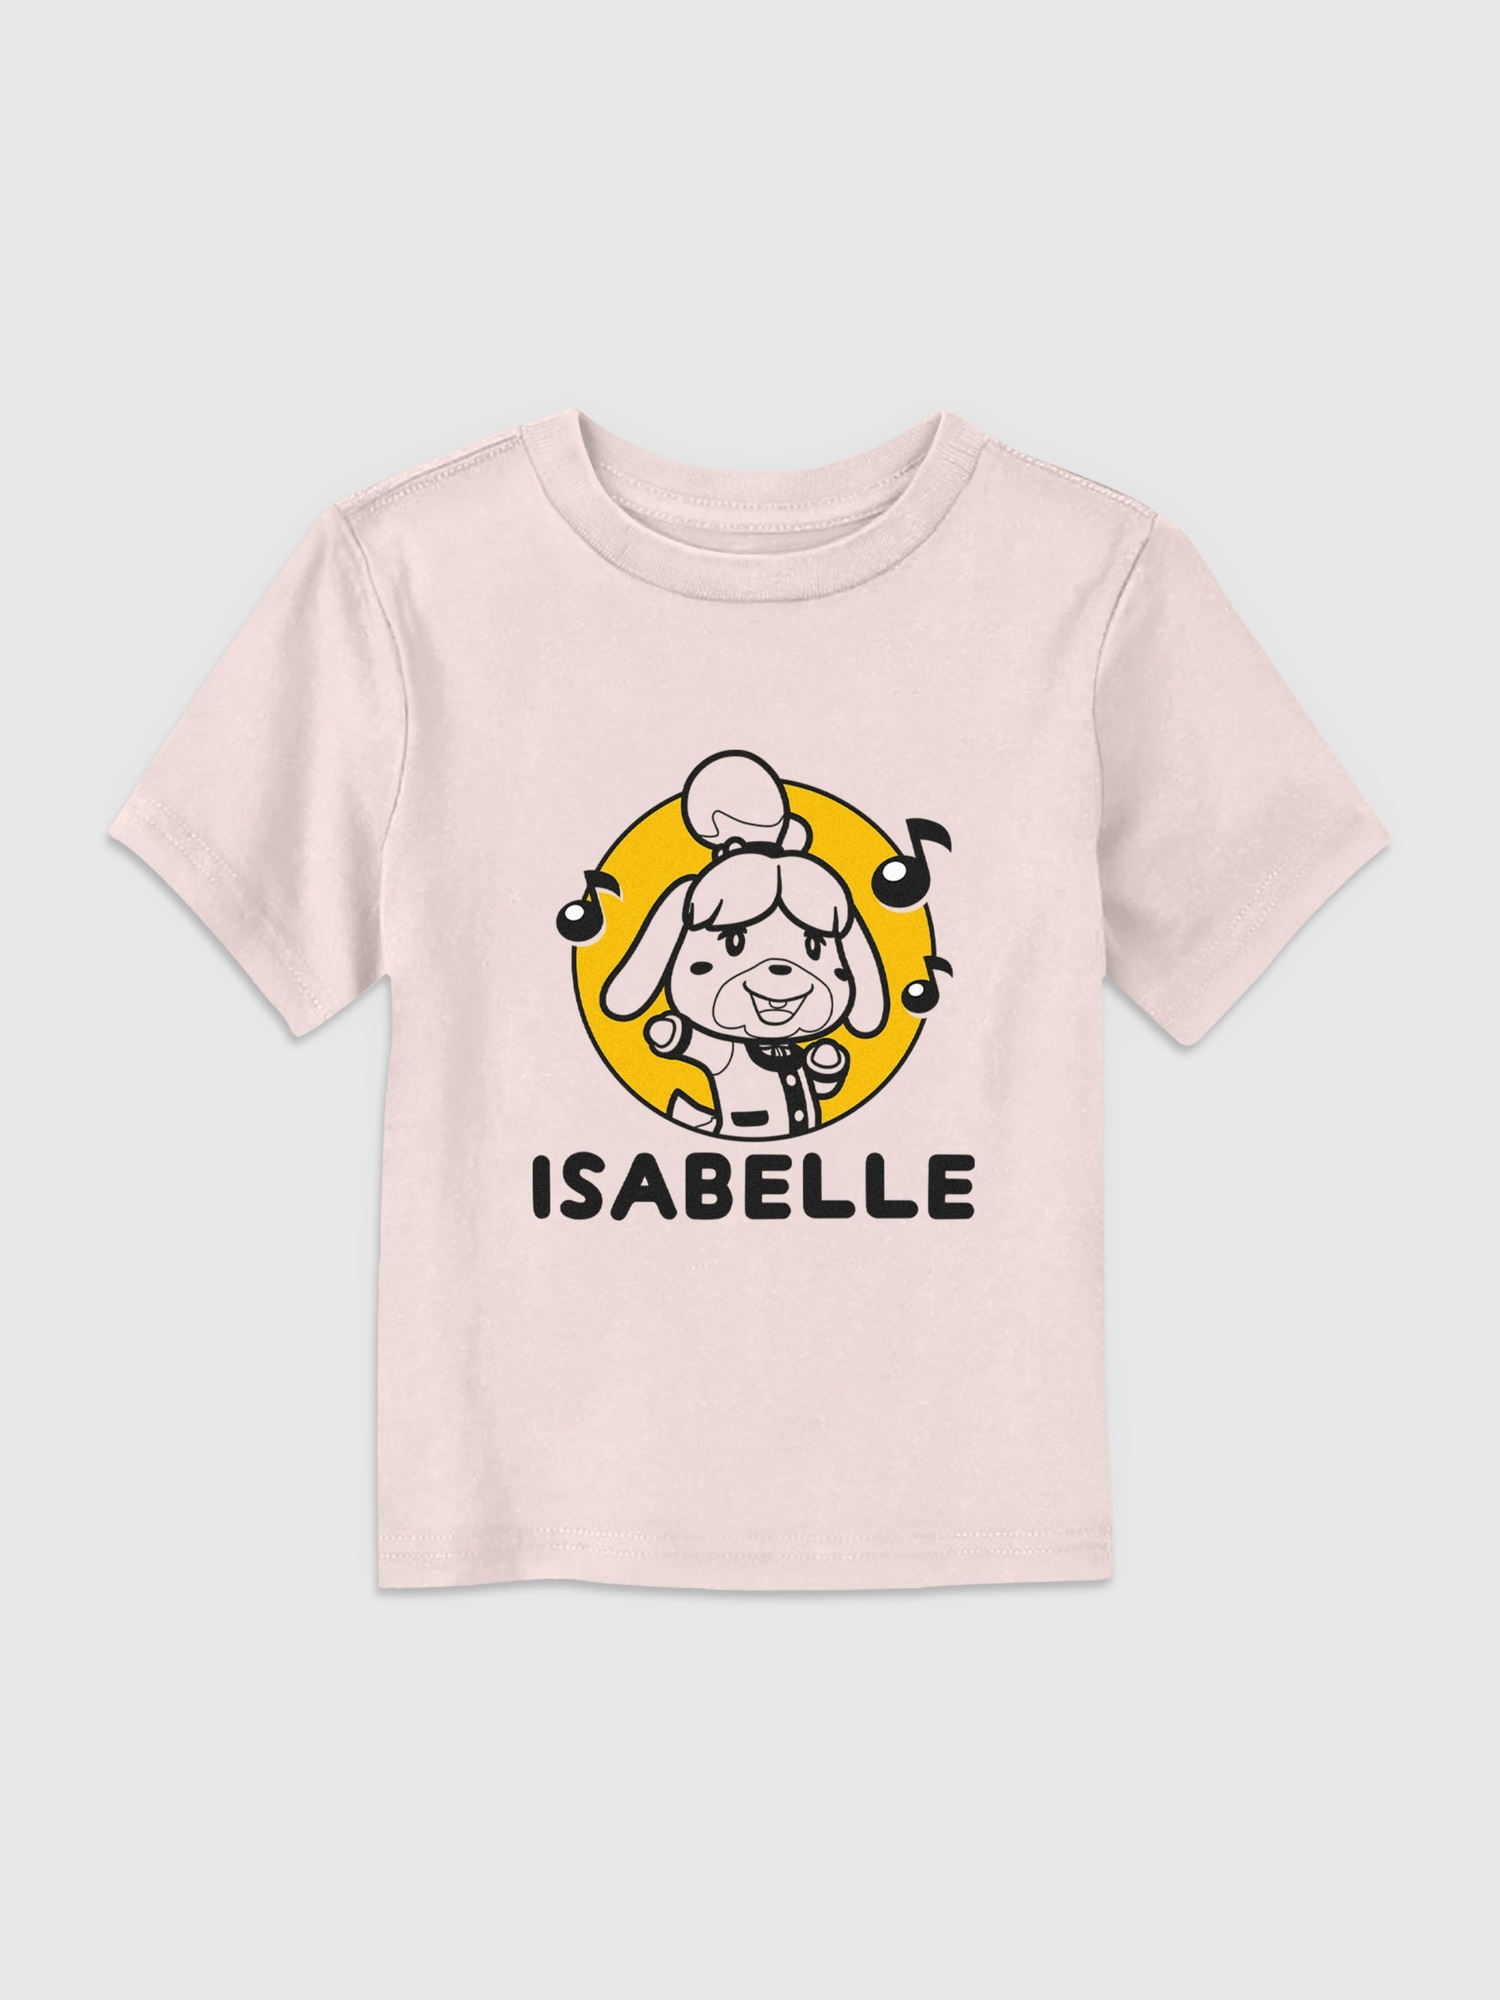 Toddler Nintendo Animal Crossing Isabelle Graphic Tee